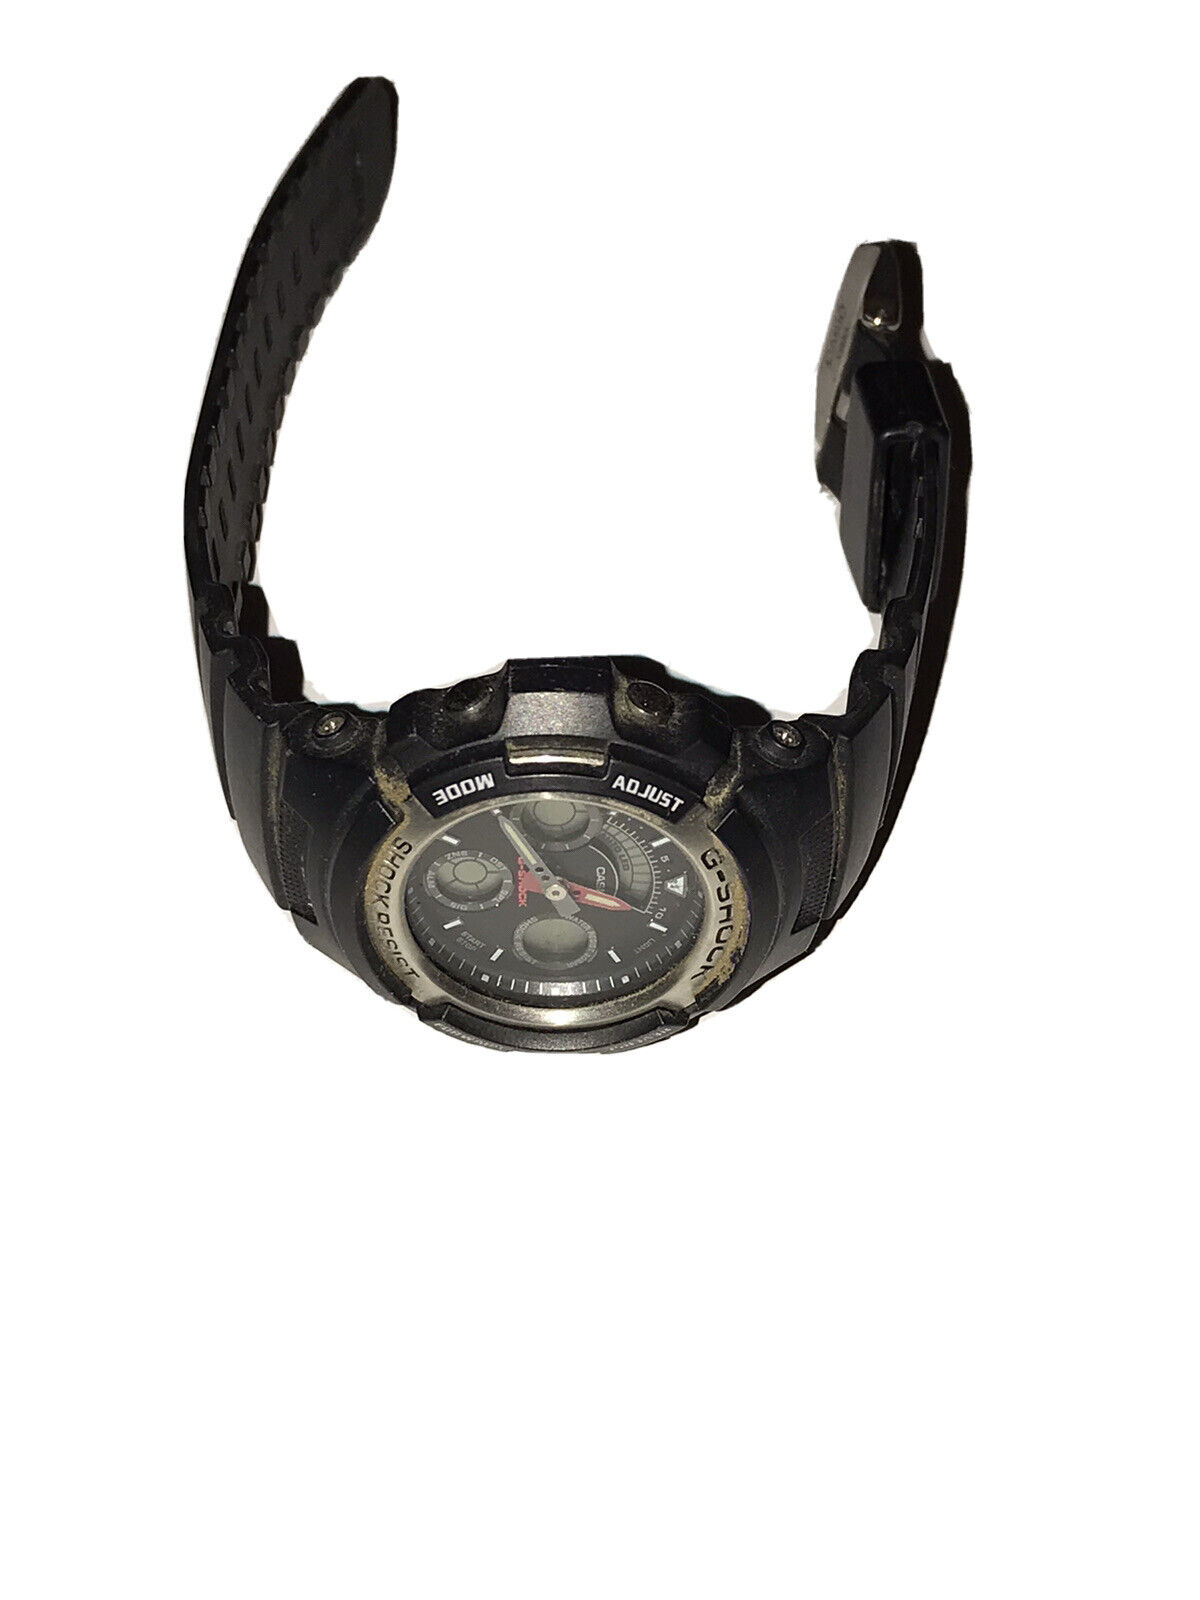 Casio G-shock Aw-590-1a Black Analog Digital Mens Watch 200m Diver 